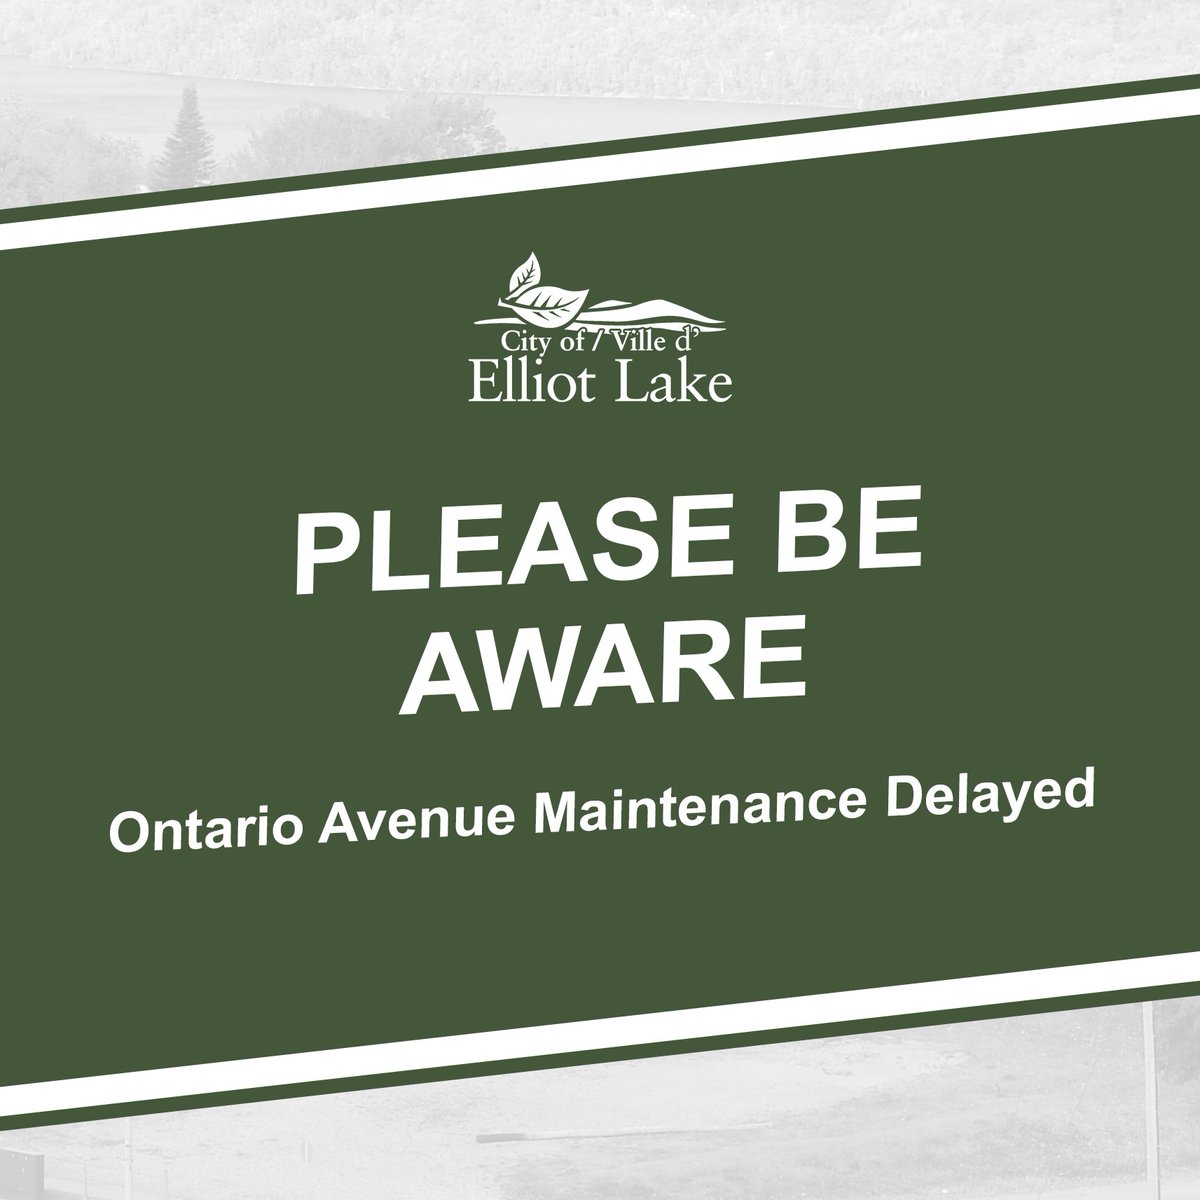 Maintenance on Ontario Avenue delayed elliotlake.ca/Modules/News/i…